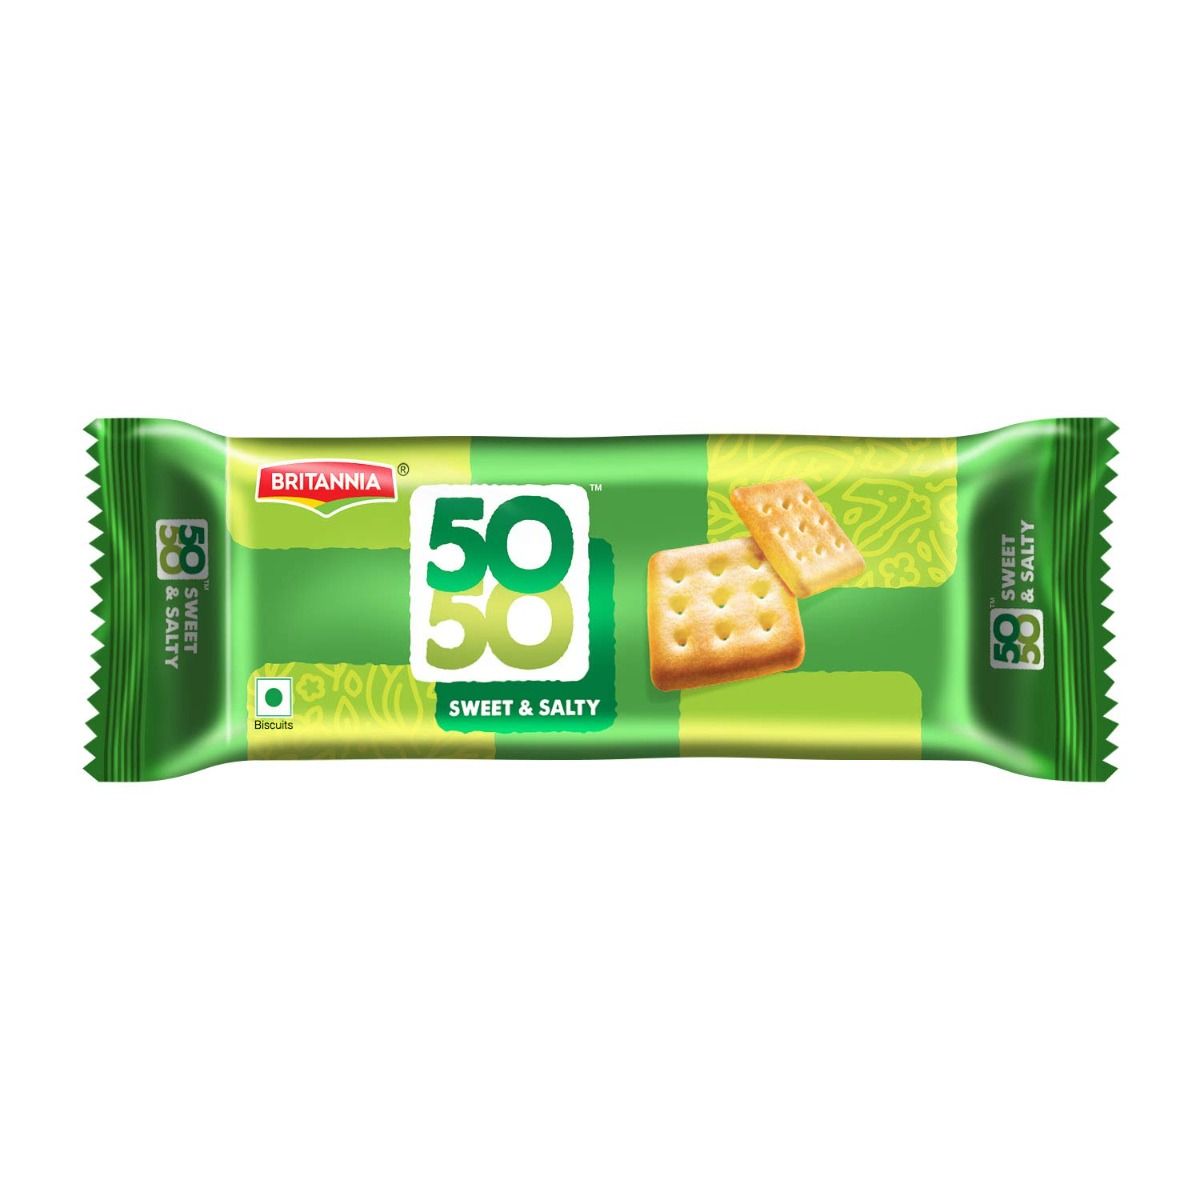 Britannia 50-50 Sweet & Salt Biscuits, 41 gm, Pack of 1 